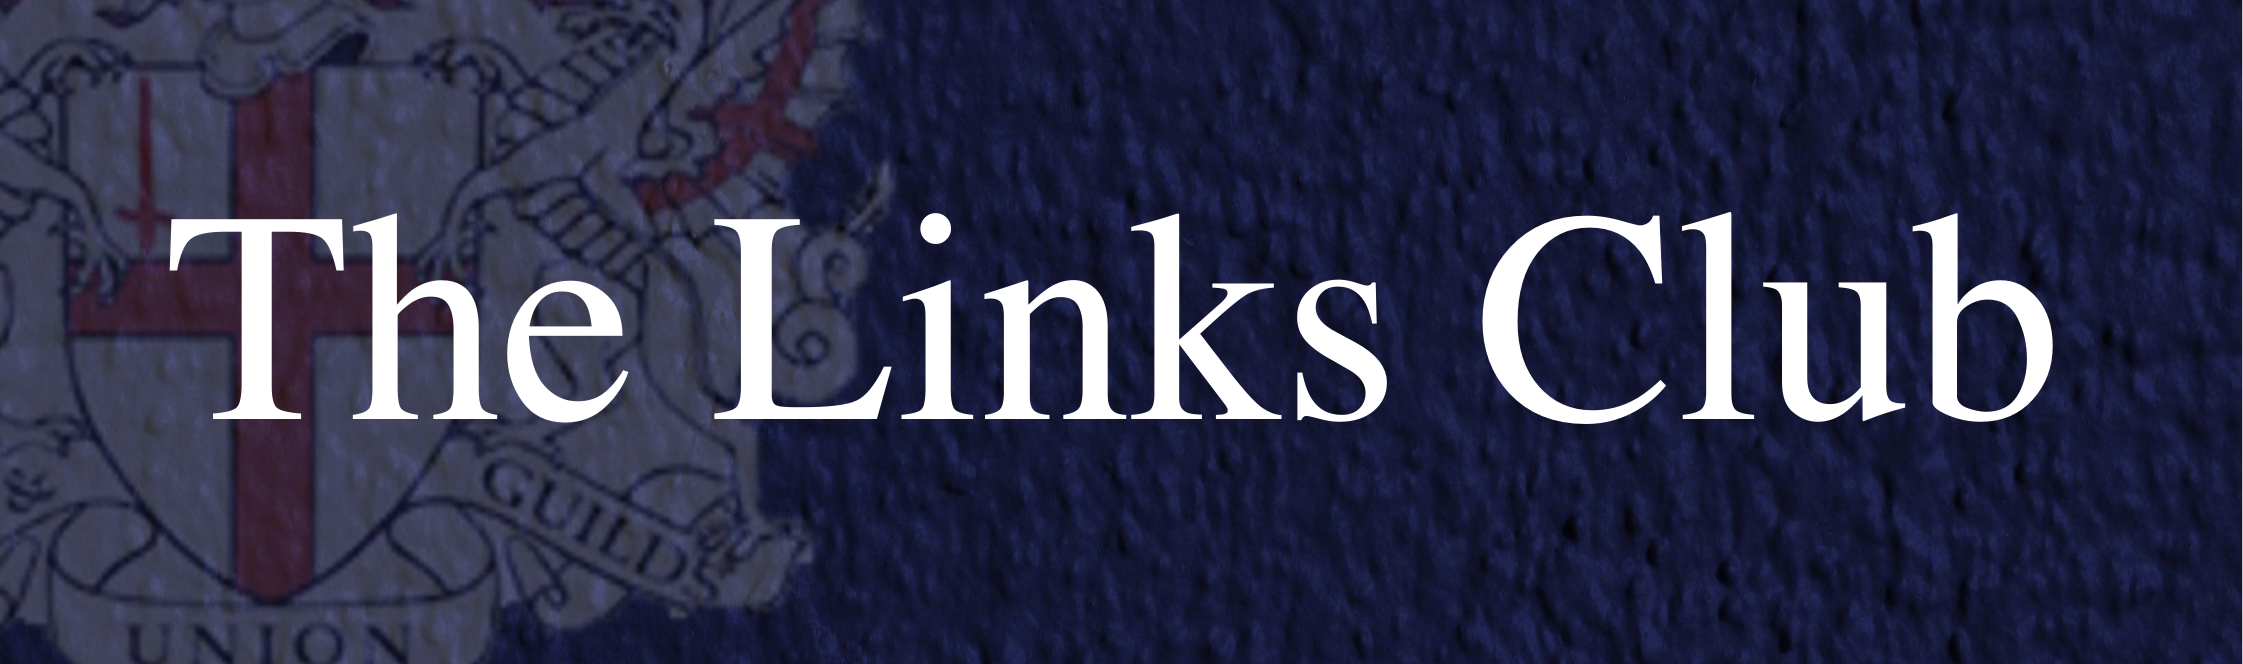 The Links Club